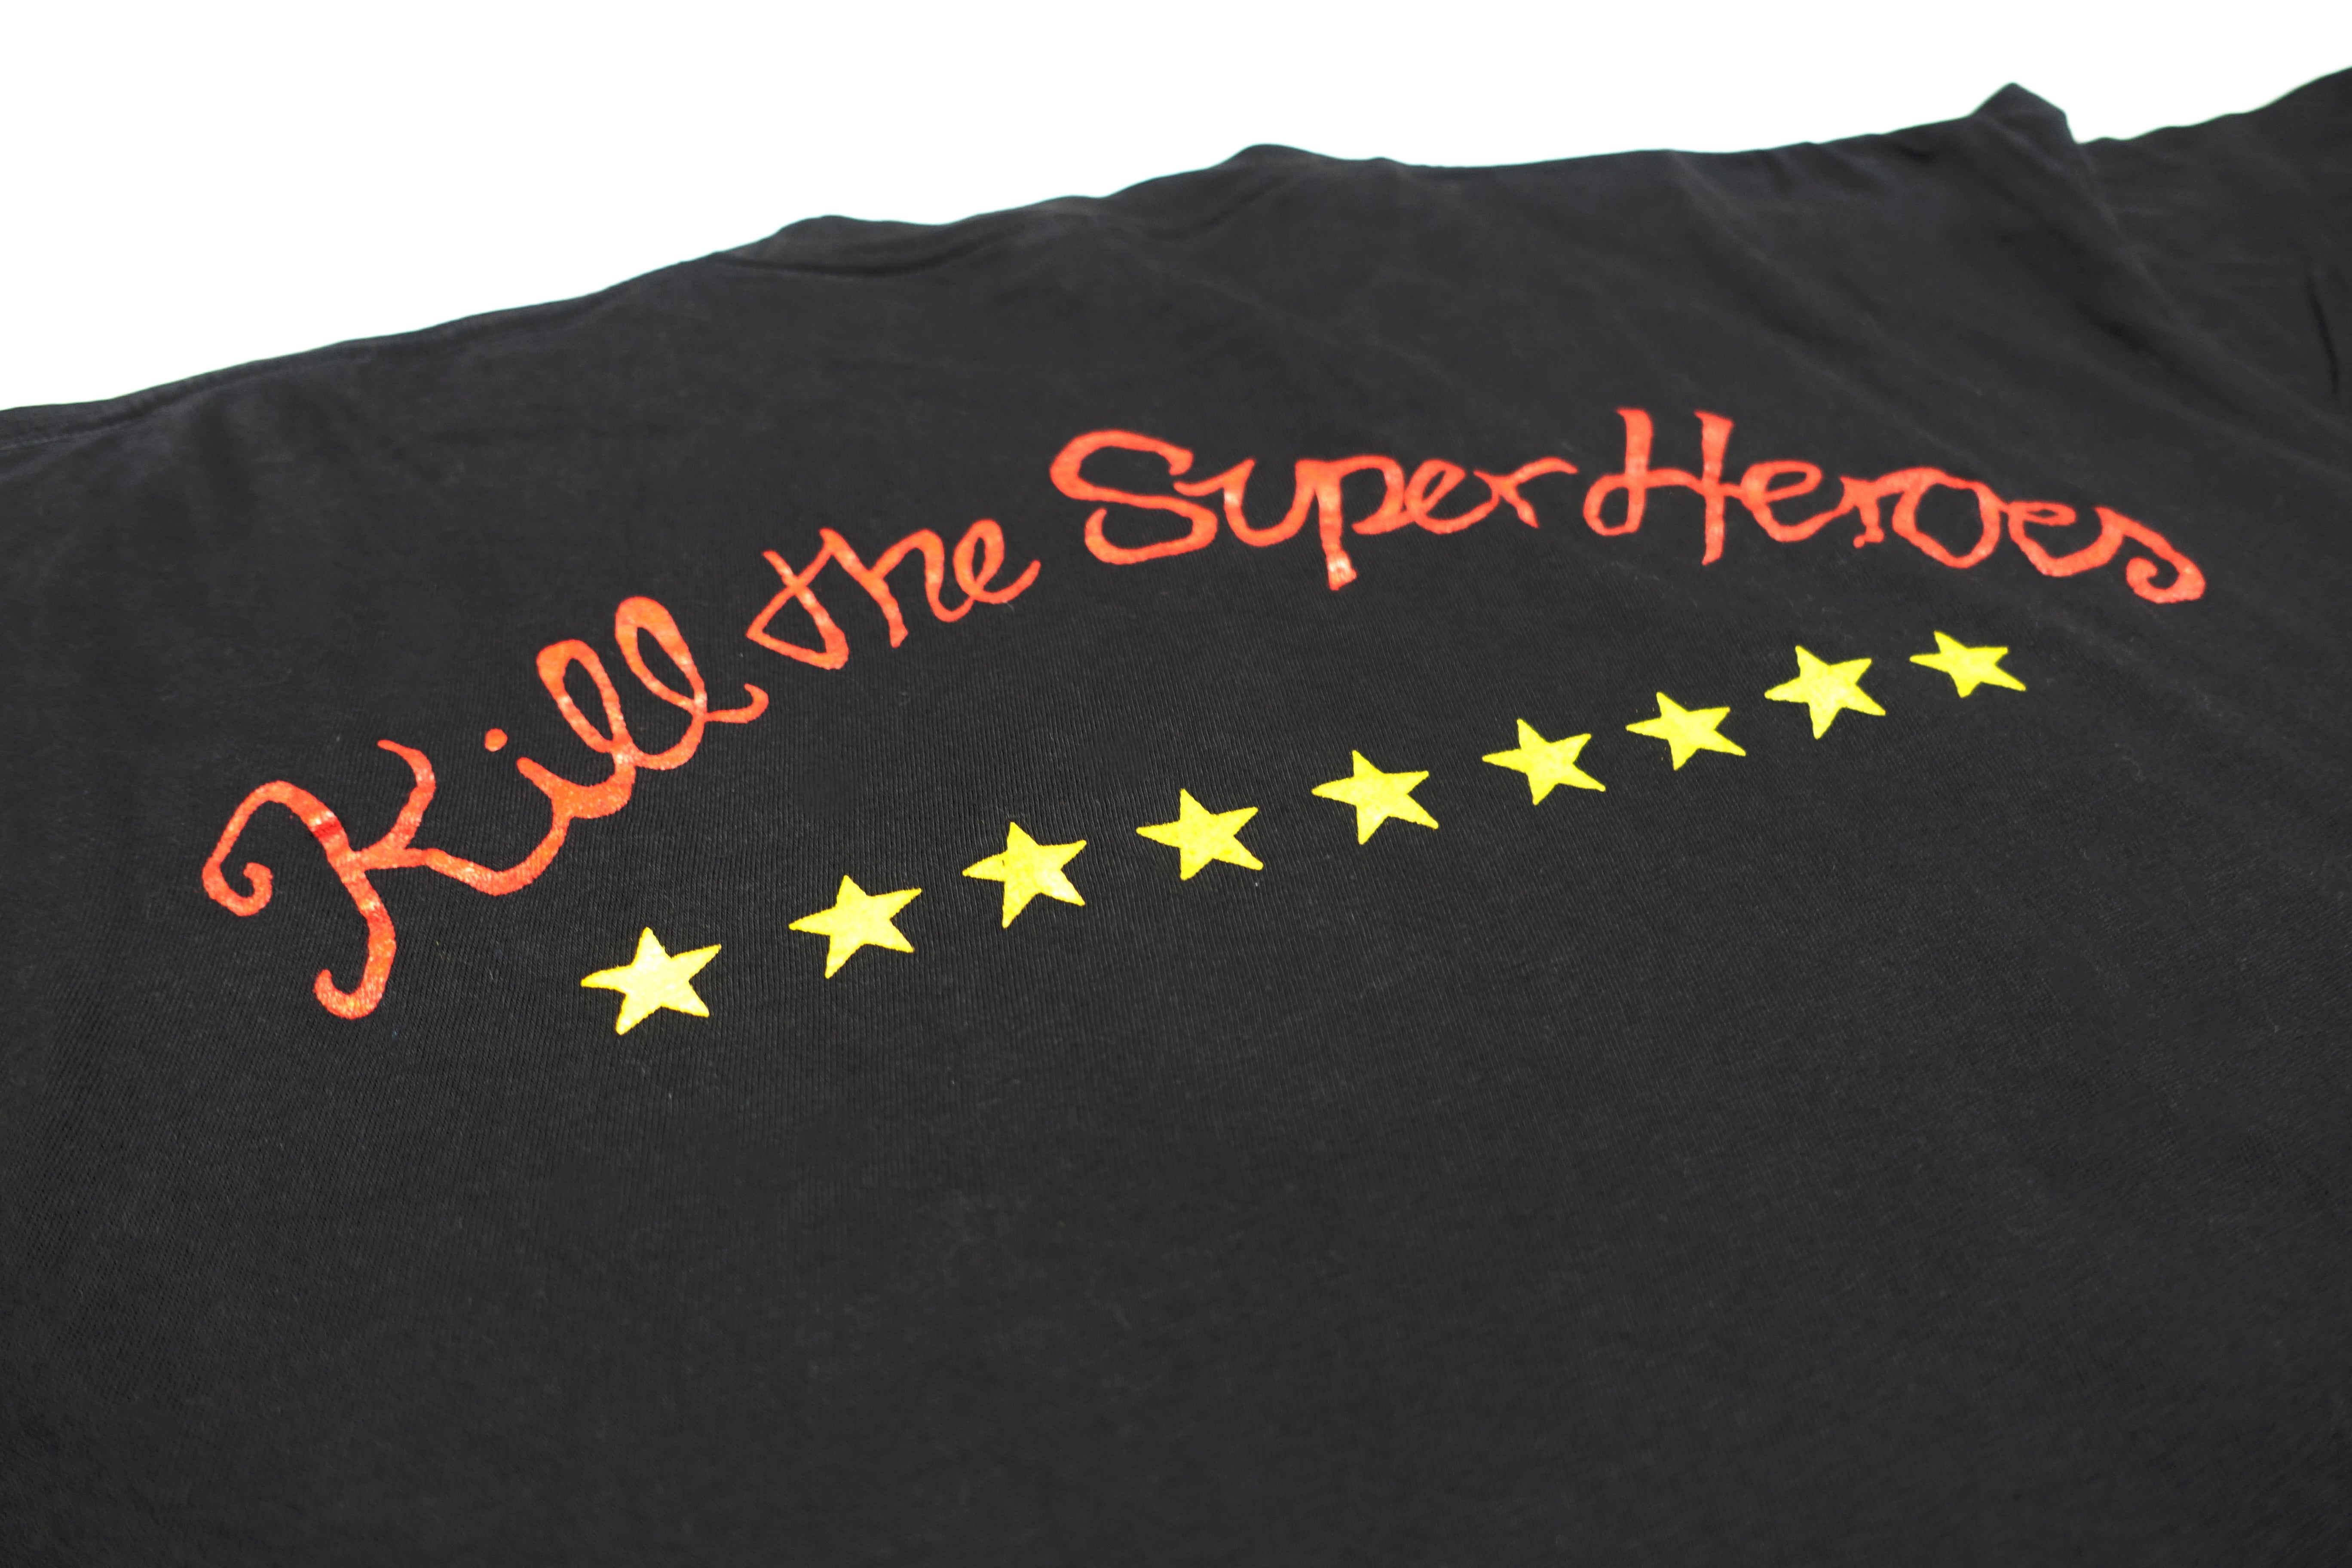 Swervedriver - Kill The Superheroes 1990 Tour Shirt Size Large